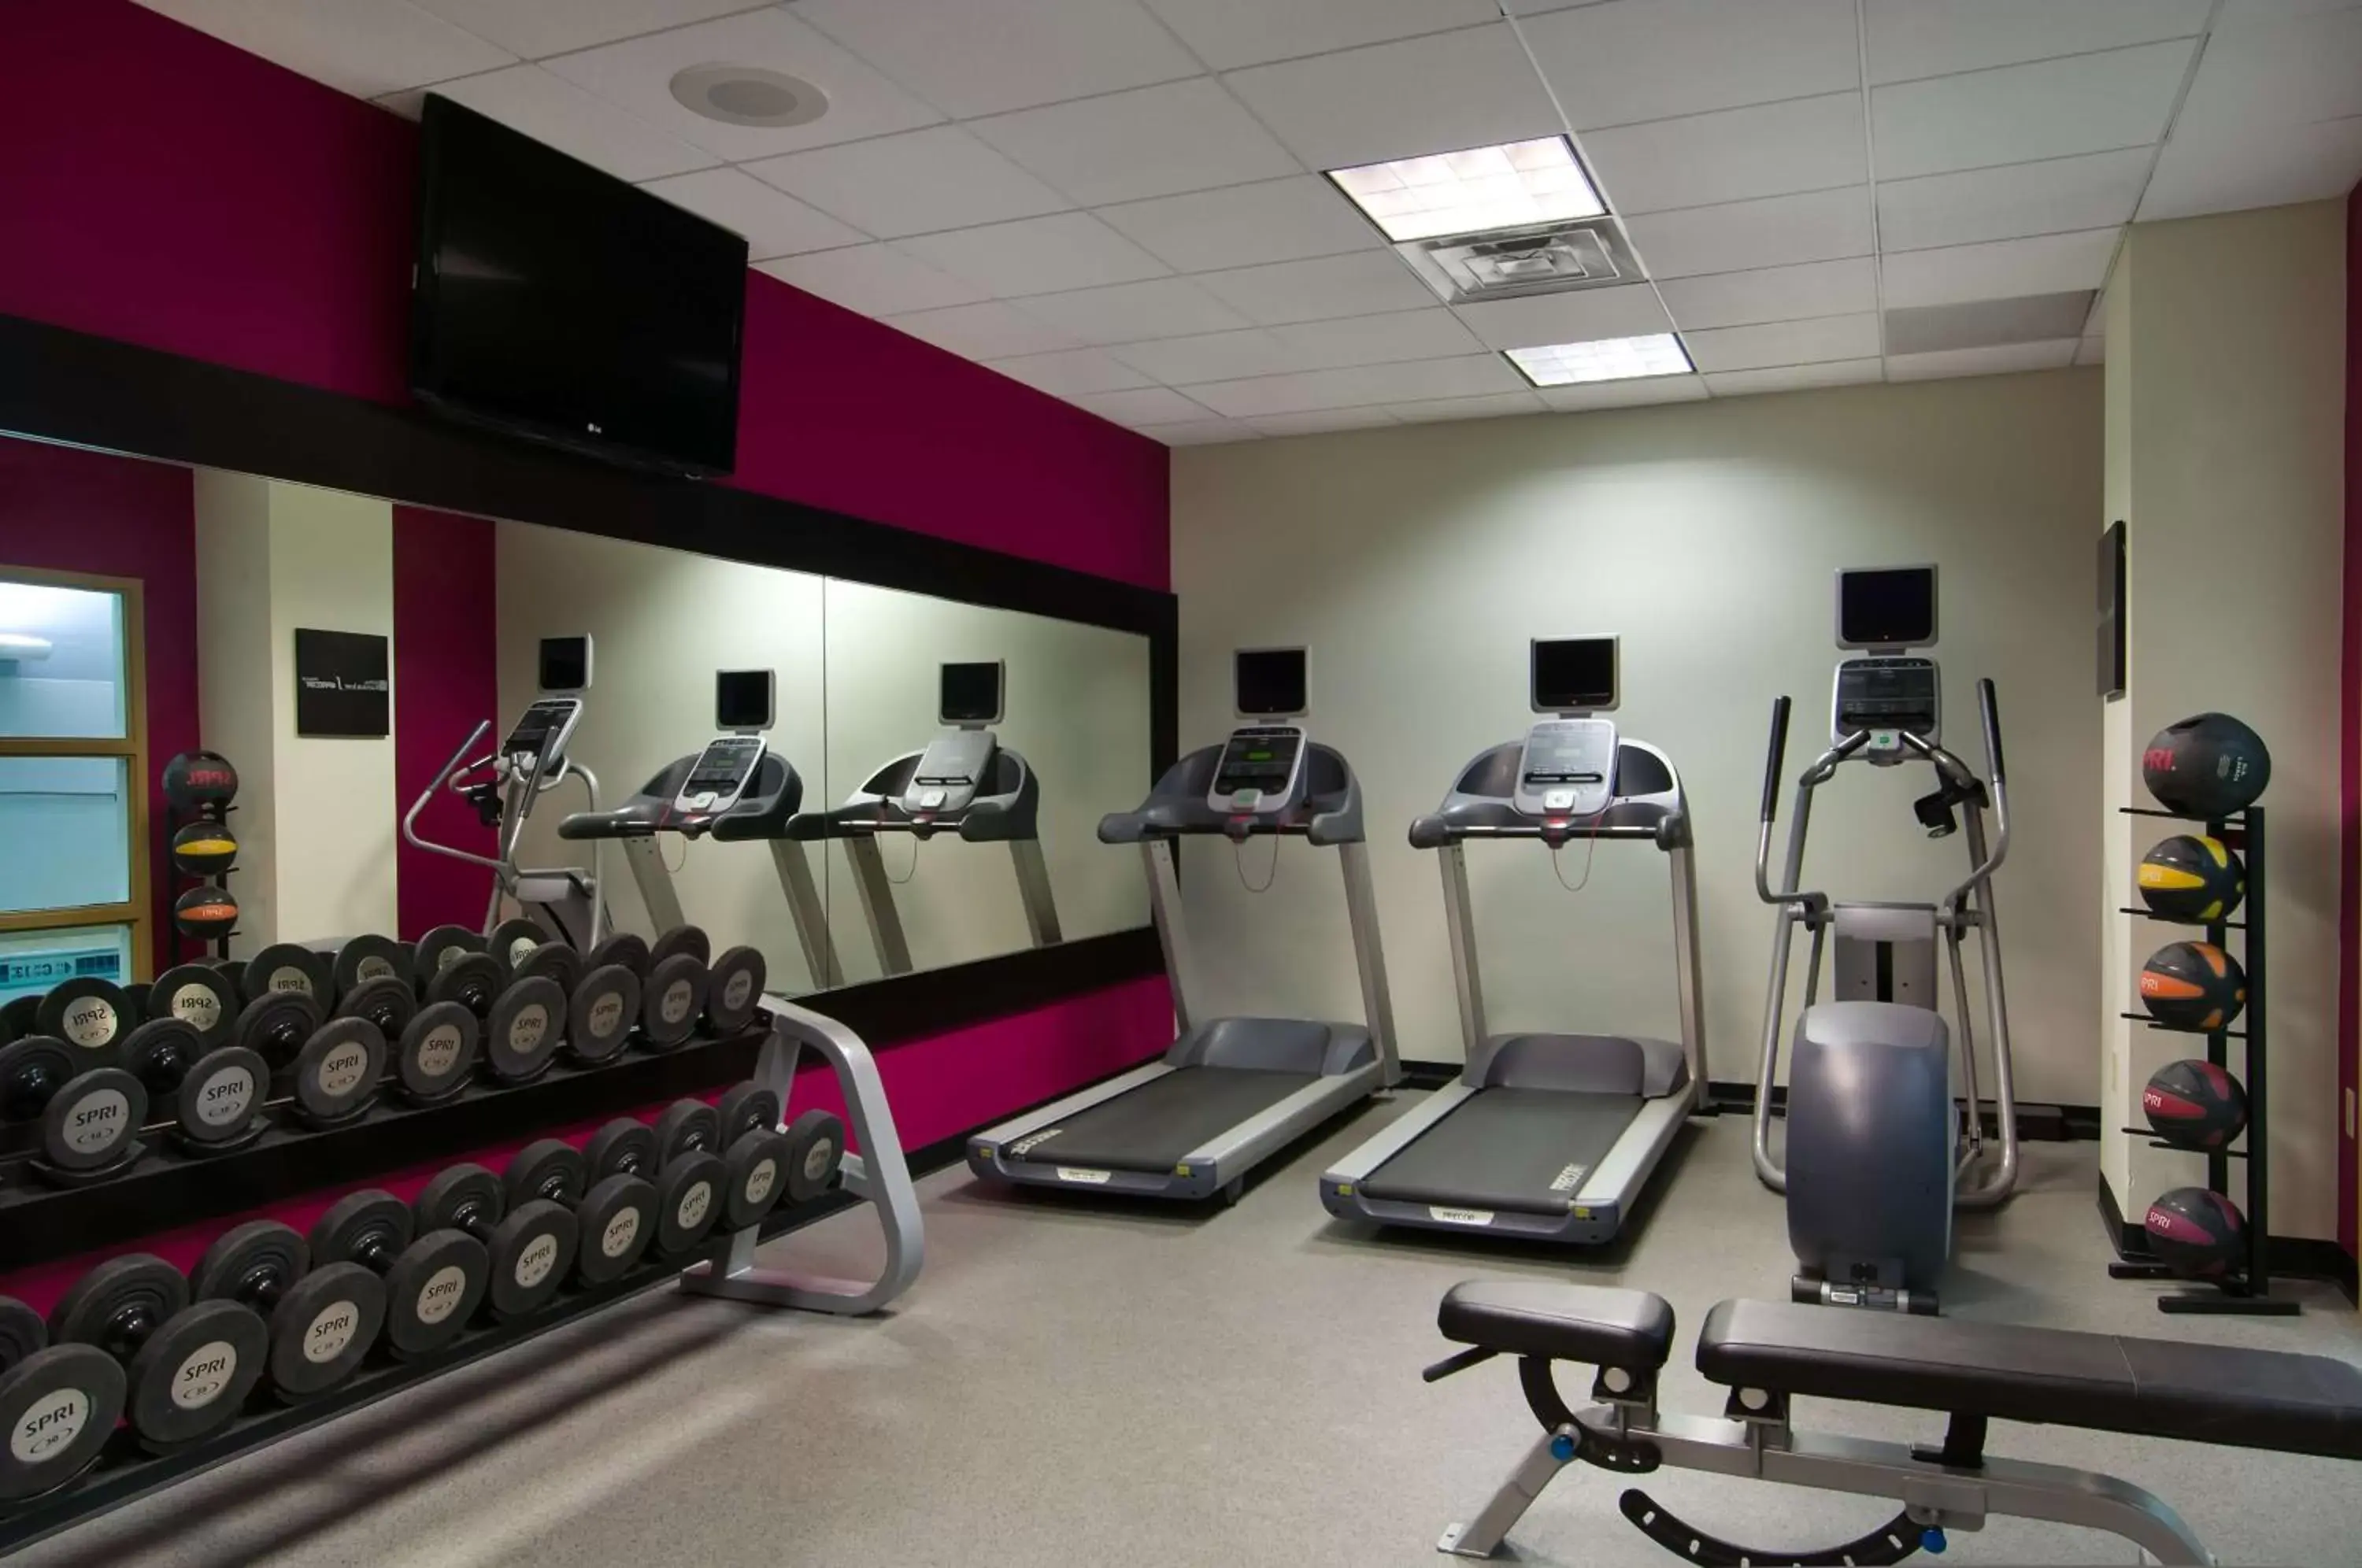 Fitness centre/facilities, Fitness Center/Facilities in Hilton Garden Inn Detroit Downtown